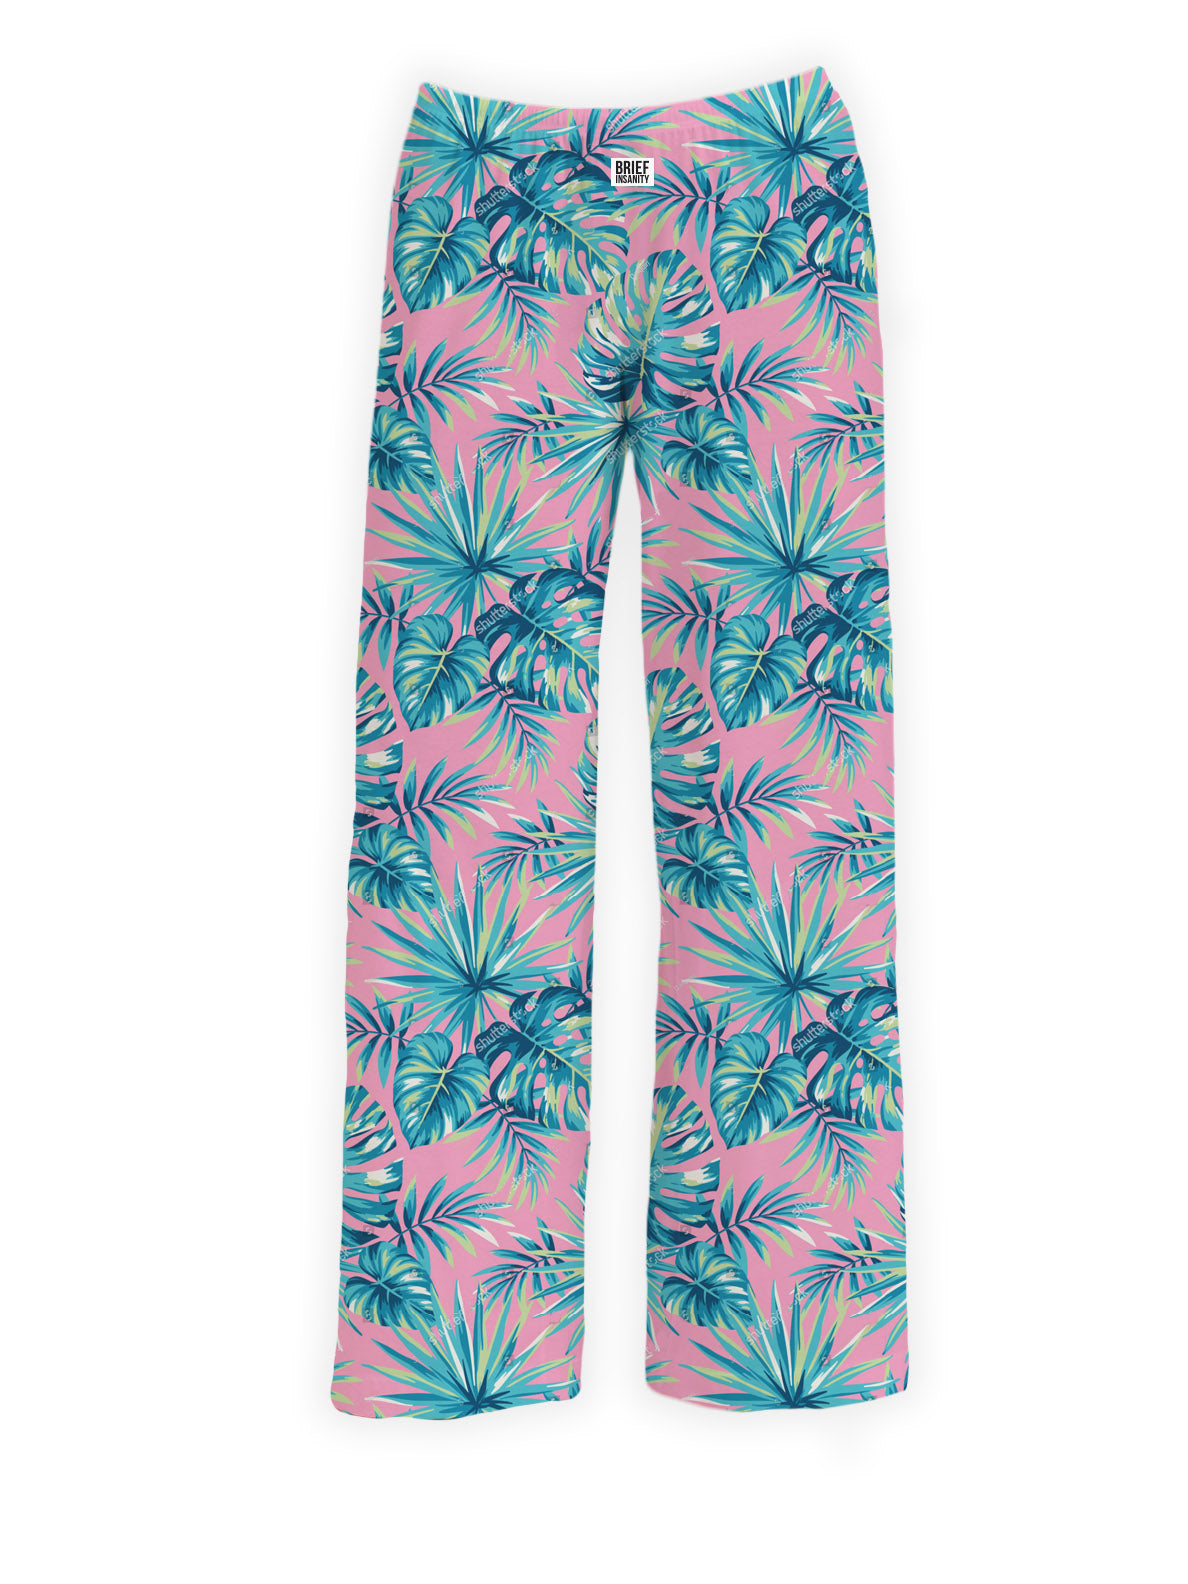 BRIEF INSANITY Tropical Leaf Pajama Lounge Pants